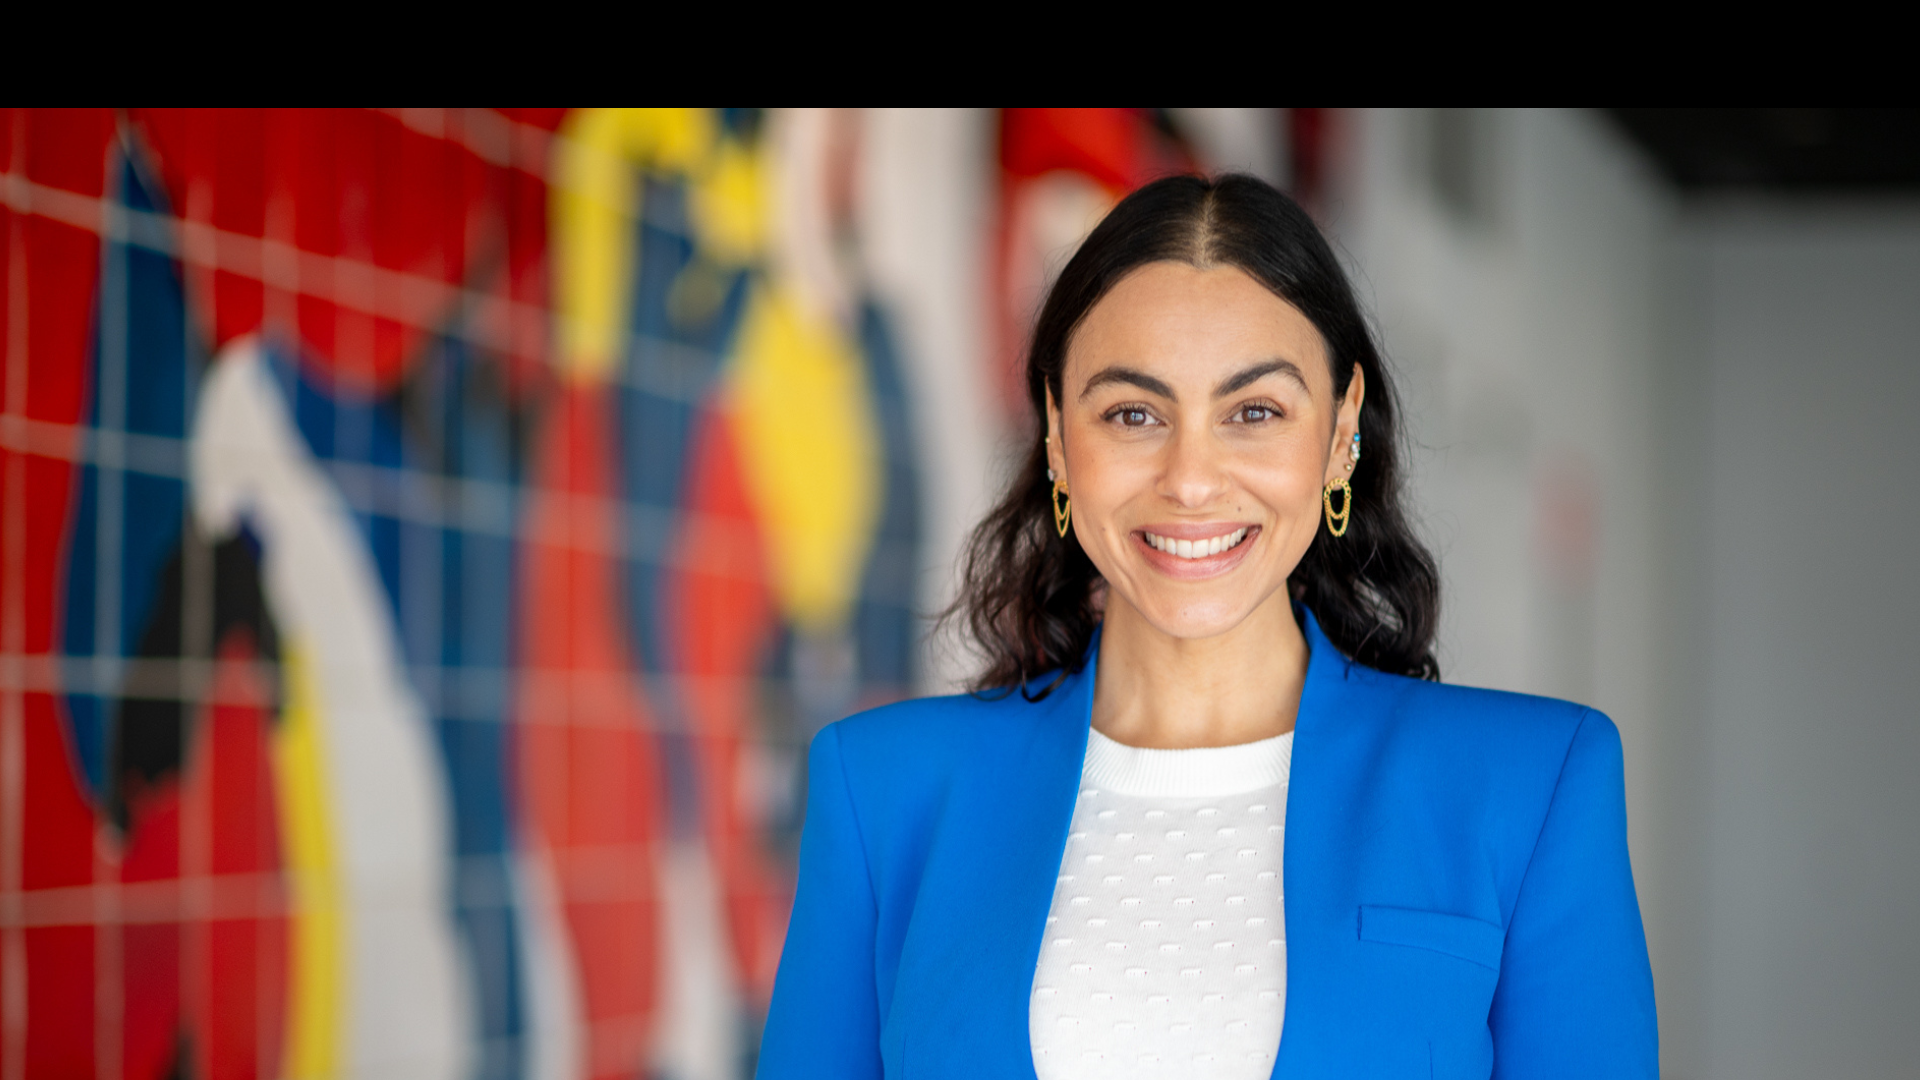 World Forum The Hague Announces Tamara Bernstein as new Commercial Director | World Forum The Hague News